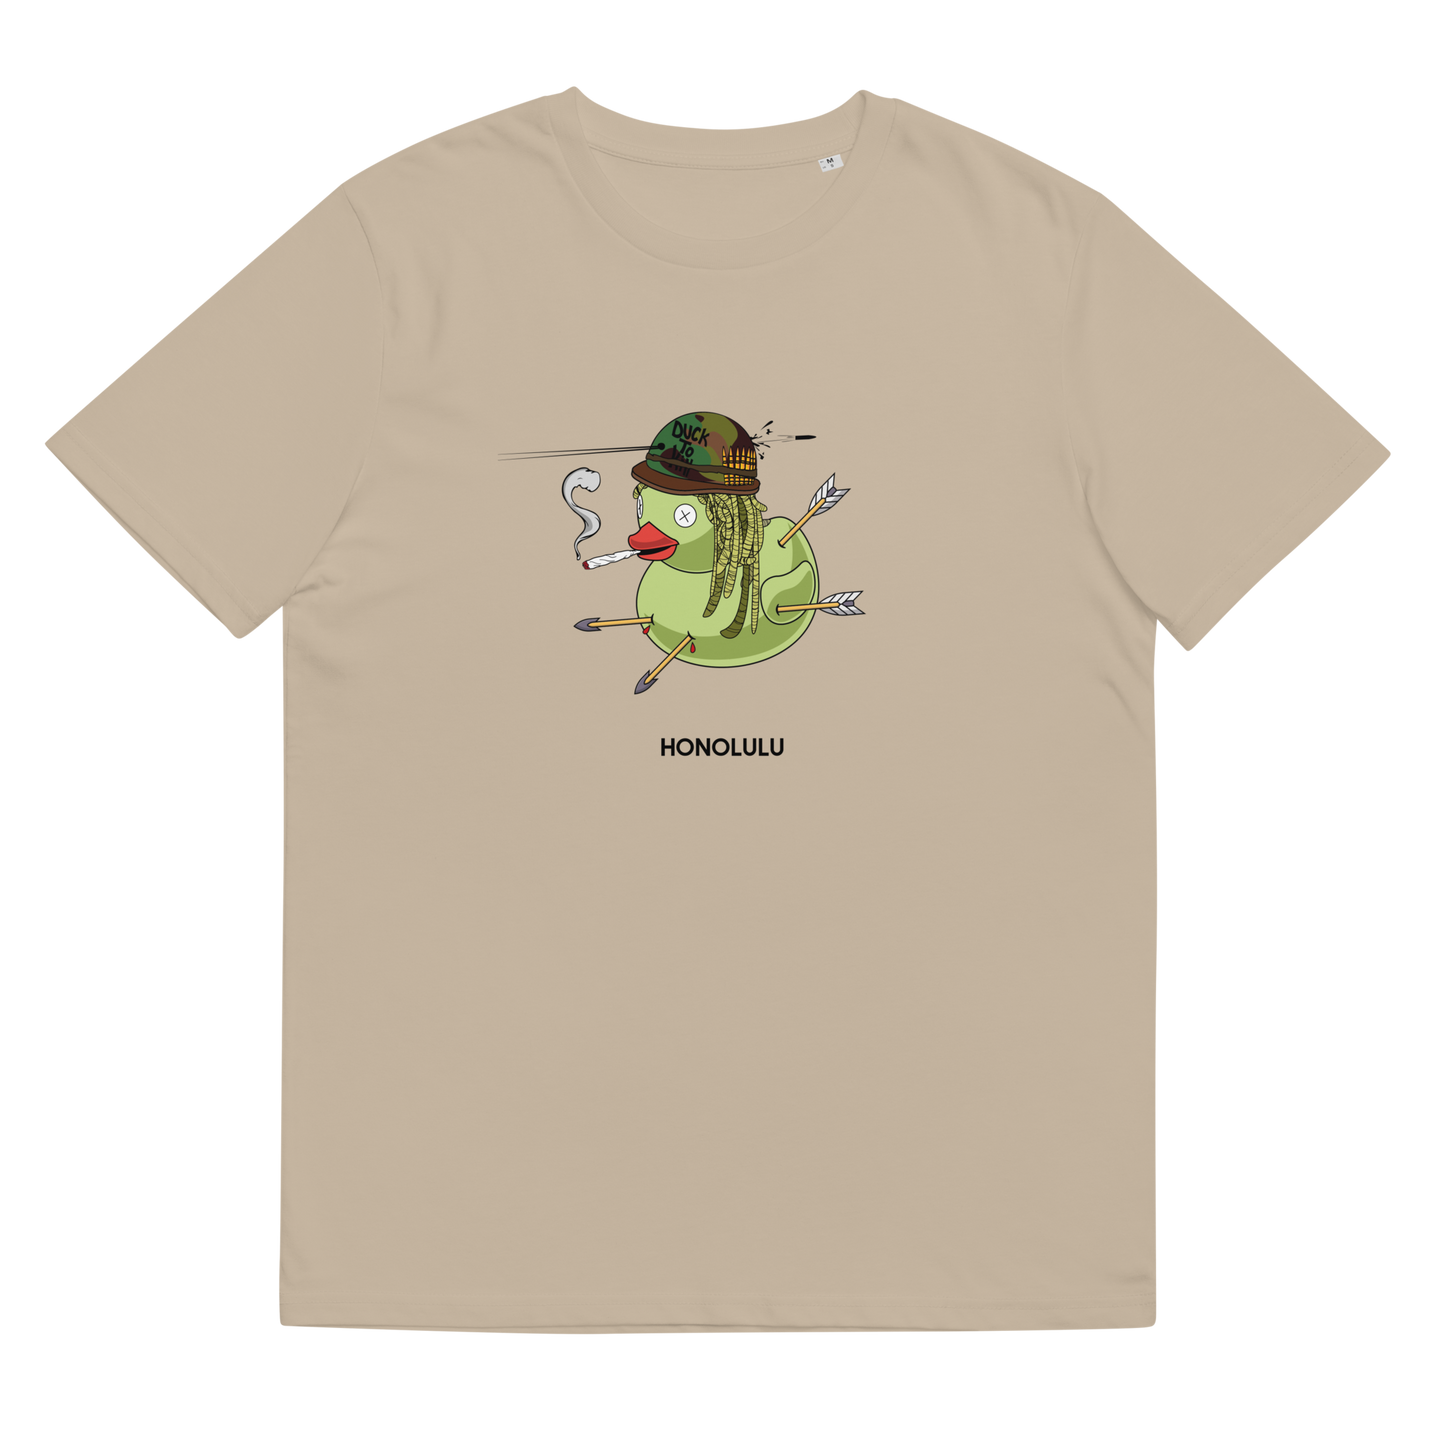 feat Ducking Idiots NFT - Unisex organic cotton t-shirt